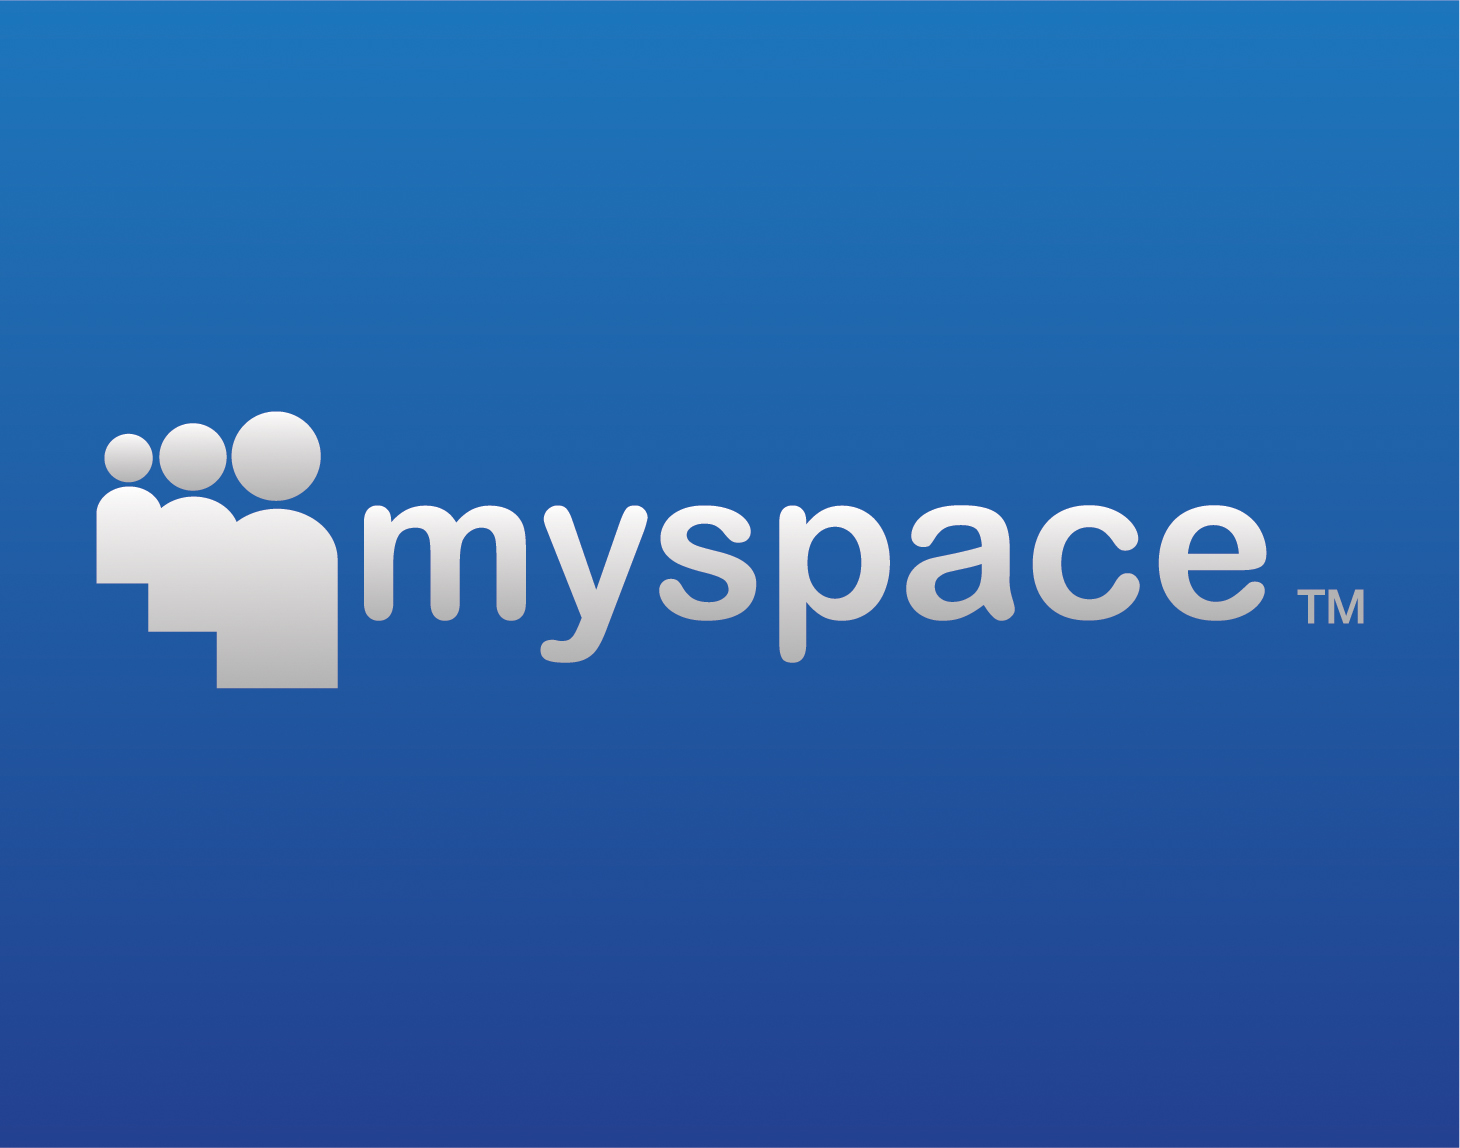 Share Photos on MySpace